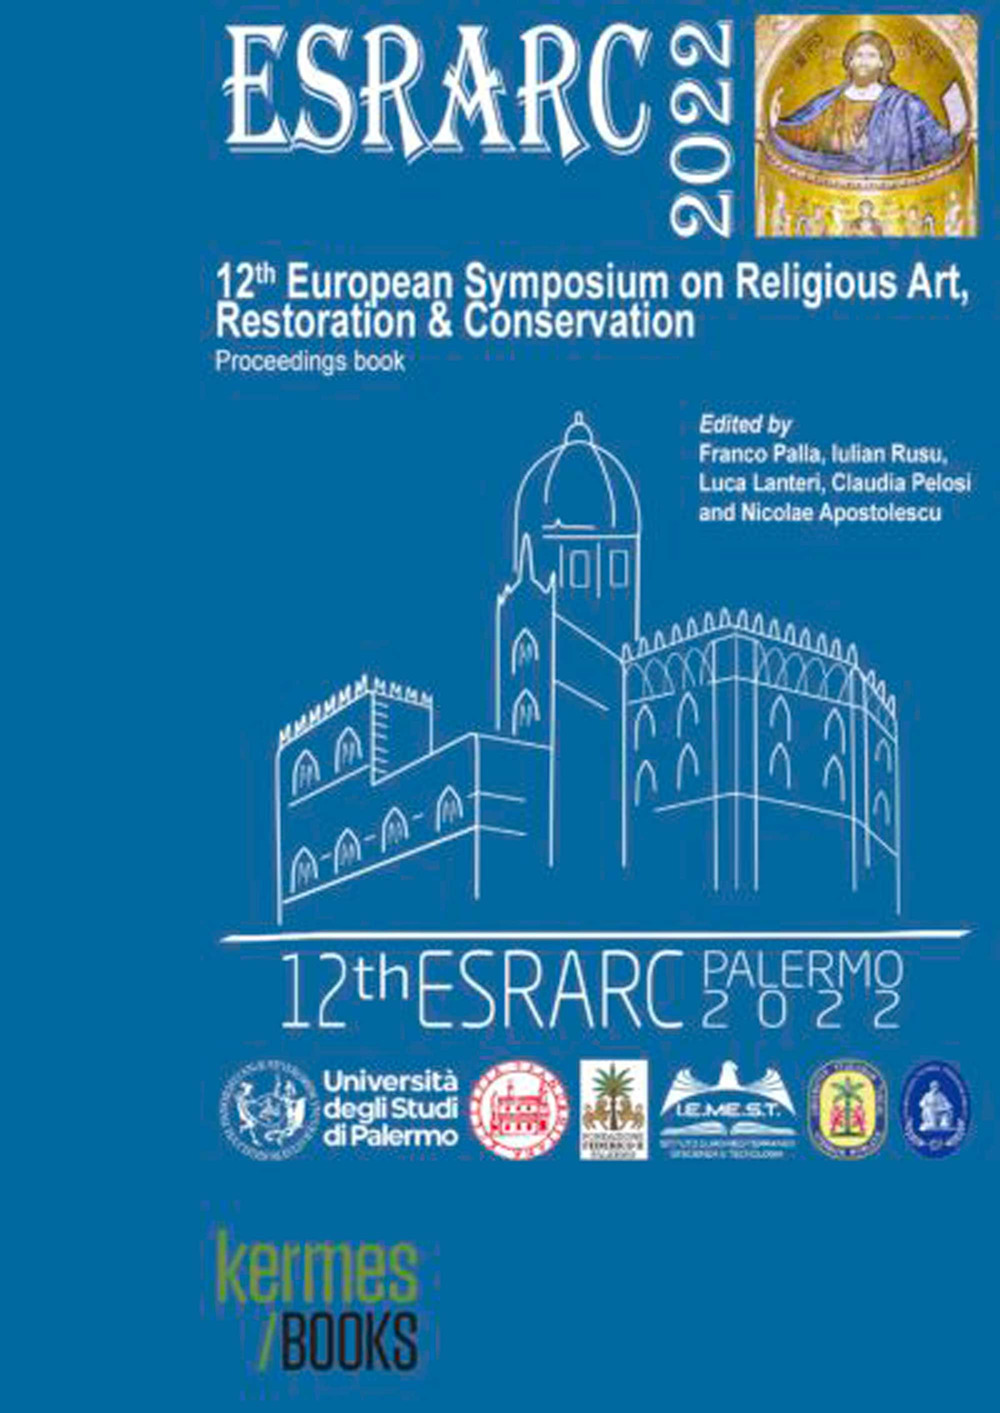 ESRARC 2022. 12th European symposium on religious art, restoration & conservation. Proceedings book (Palermo, 14th-16th September 2022)